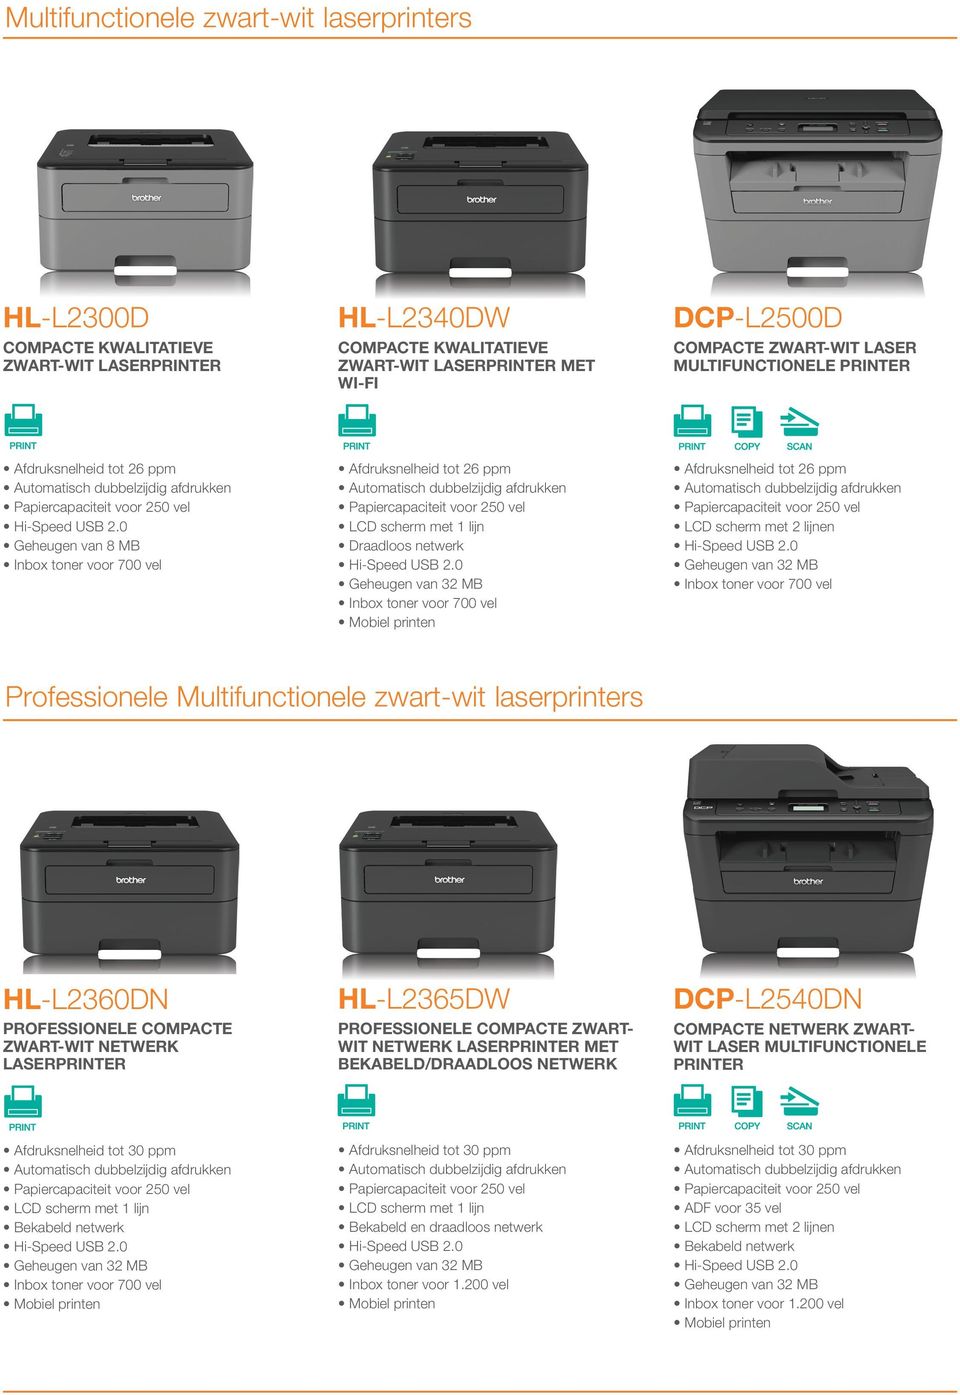 zwart-wit laerprinter HL-L2360DN Profeionele Compacte ZWART-WIT Netwerk Laerprinter HL-L2365DW Profeionele Compacte ZWART- WIT Netwerk Laerprinter MET